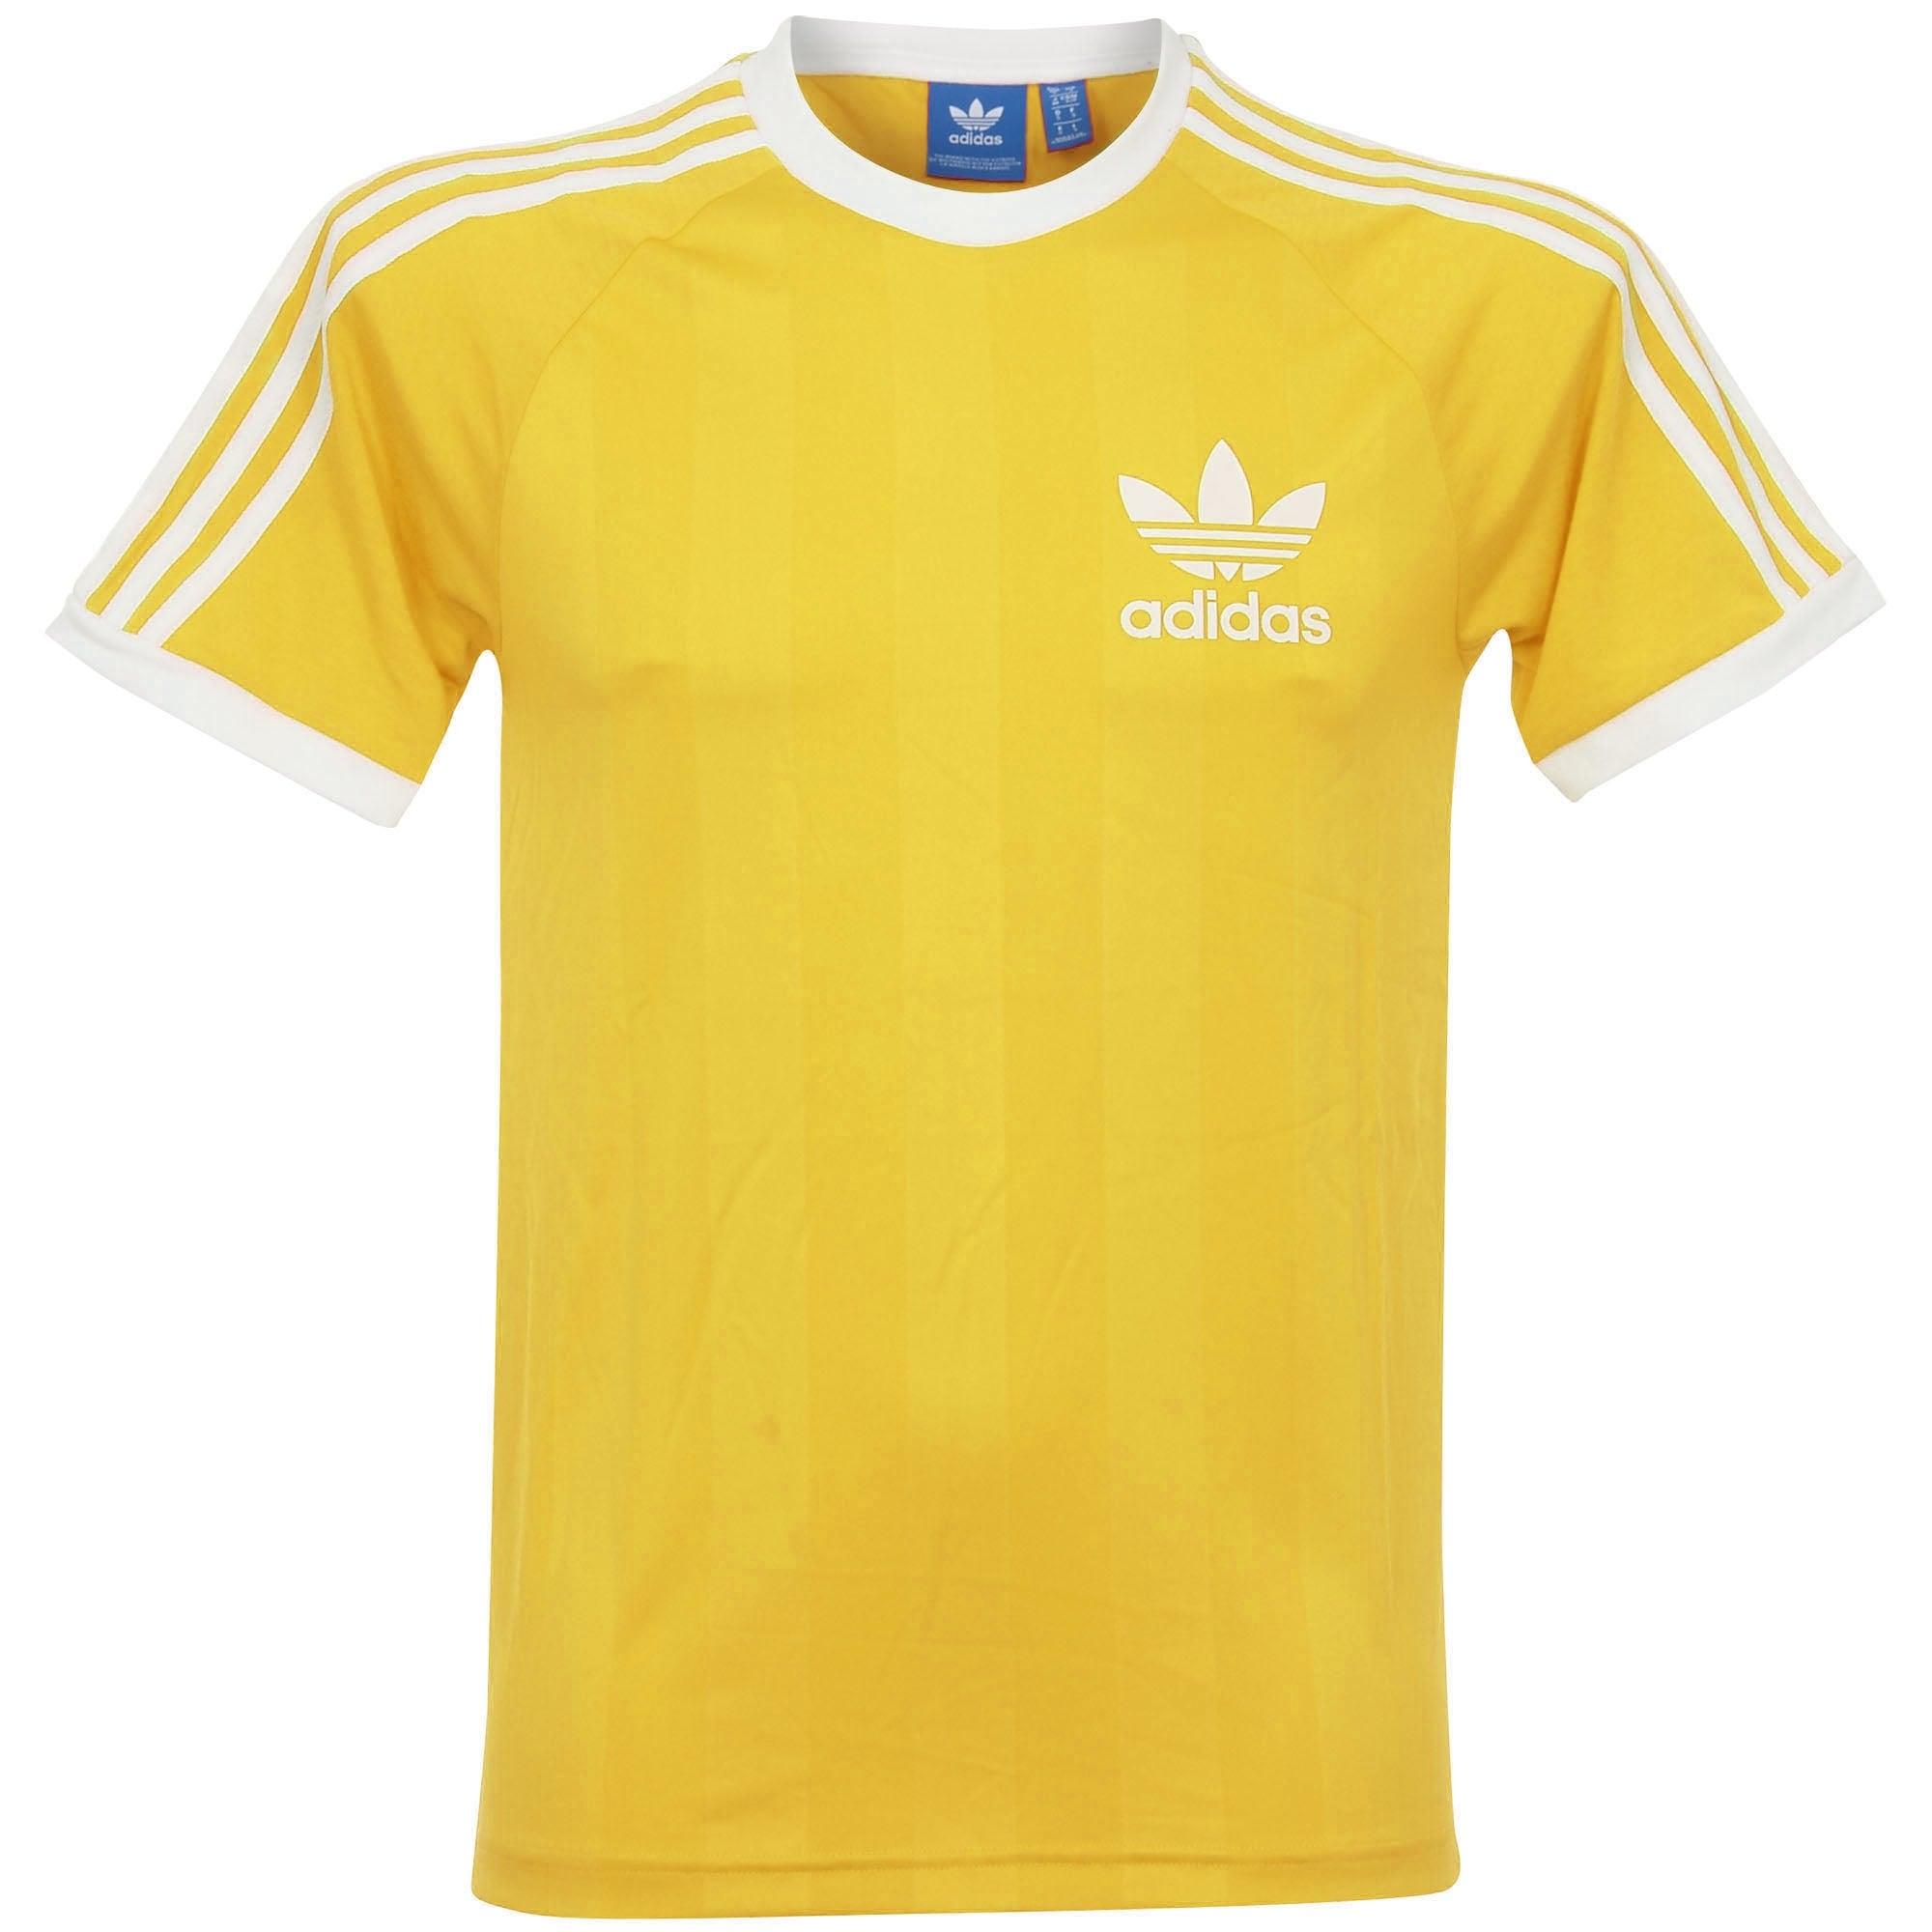 adidas Originals Adidas Clfn Tee Yellow T-Shirt Cf5305 in Yellow for ...